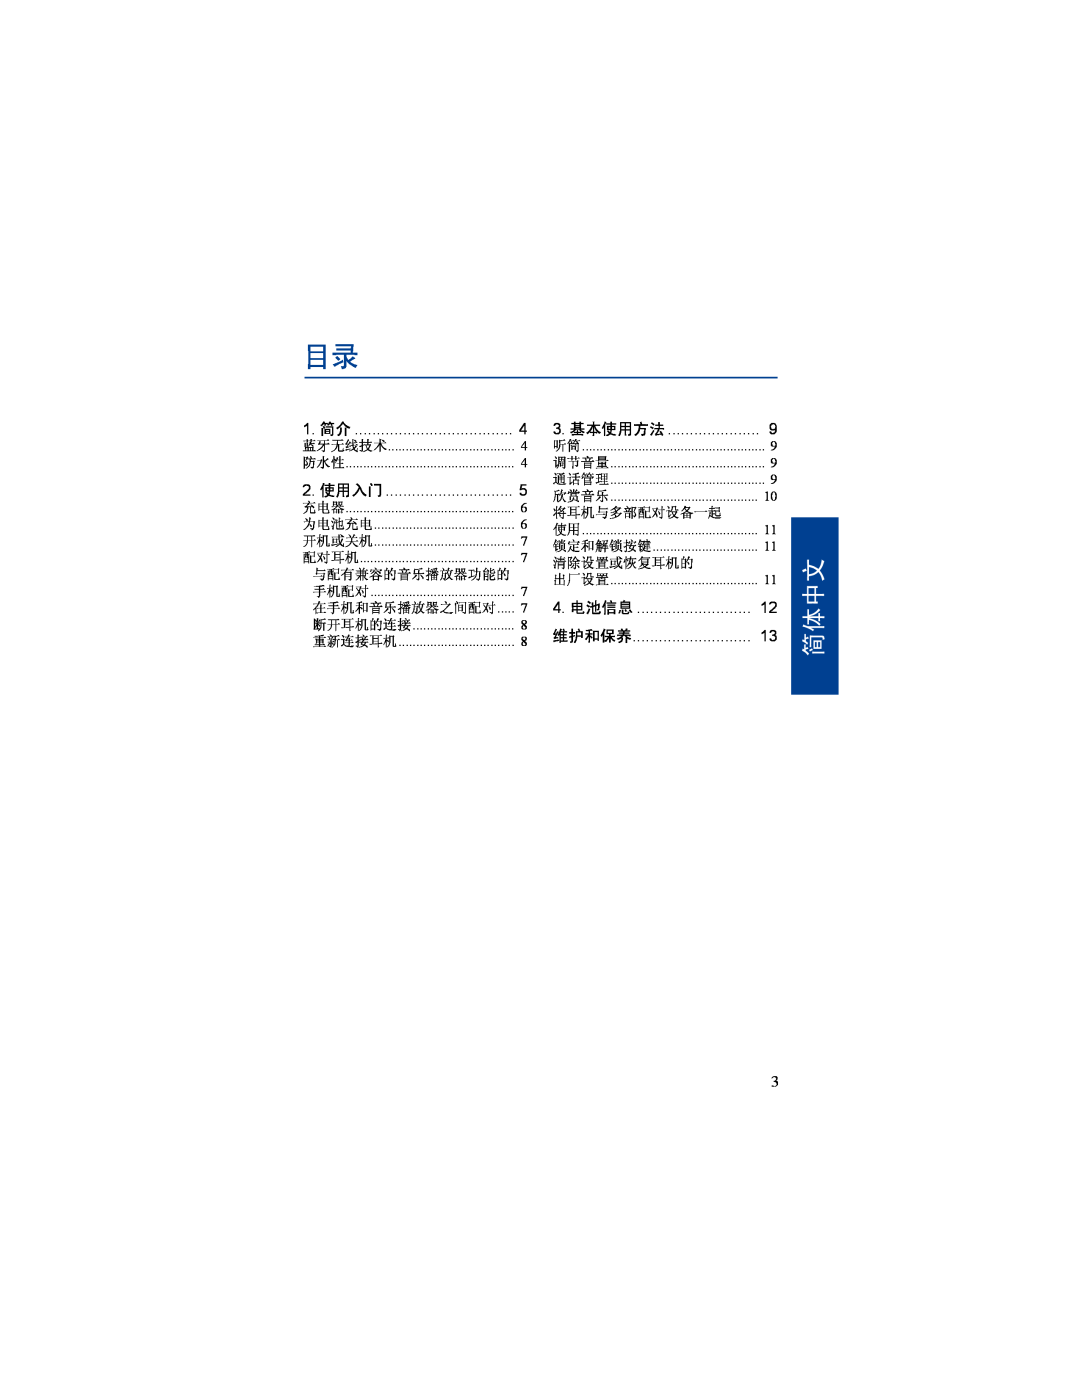 Nokia BH-500 manual 简体中文 